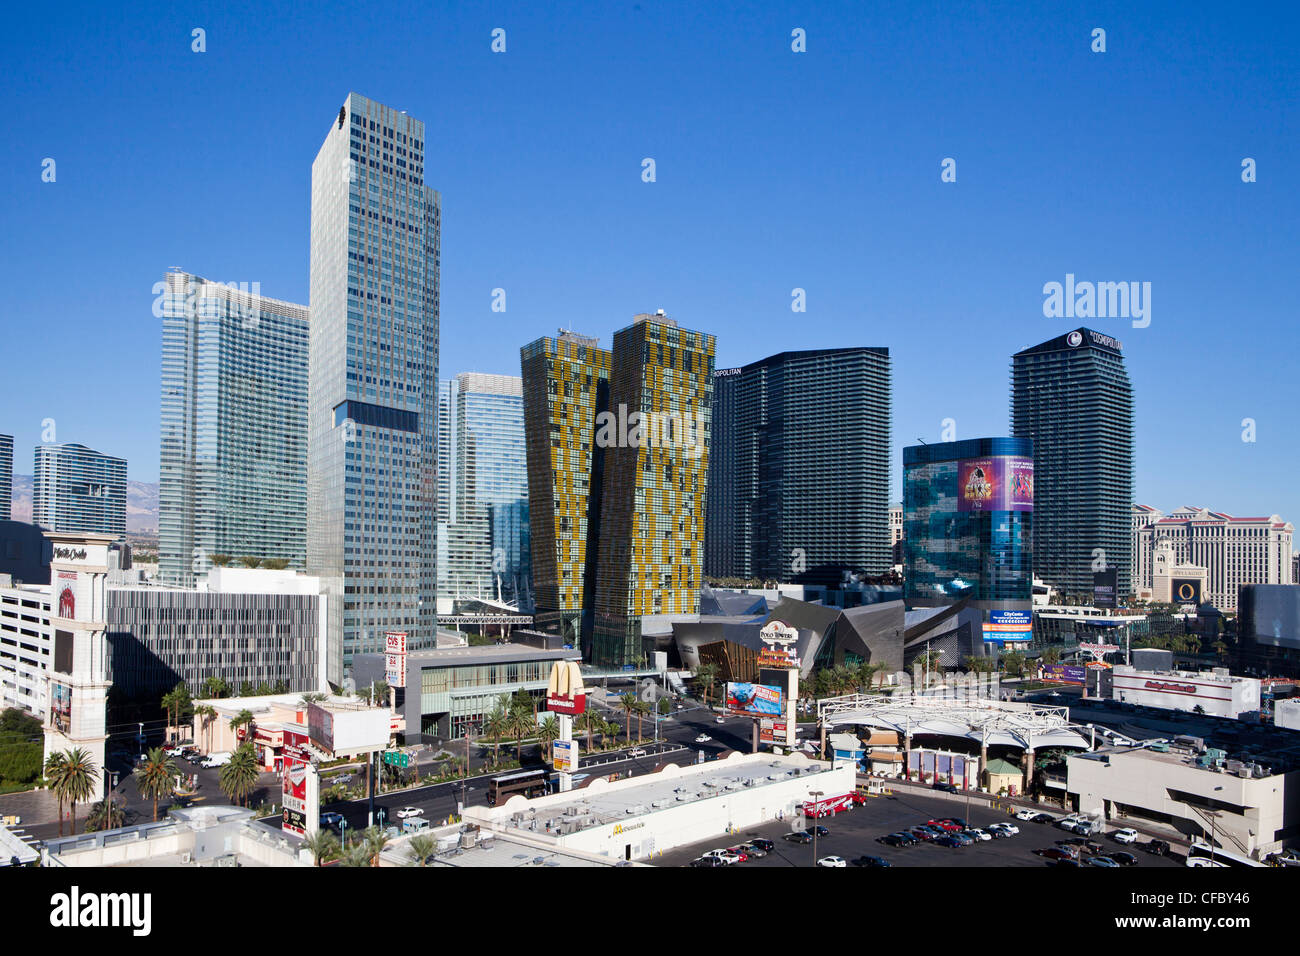 USA, United States, America, Nevada, Las Vegas, City, Strip, Avenue, architecture, lean, busy, casinos, center, colourful, famou Stock Photo